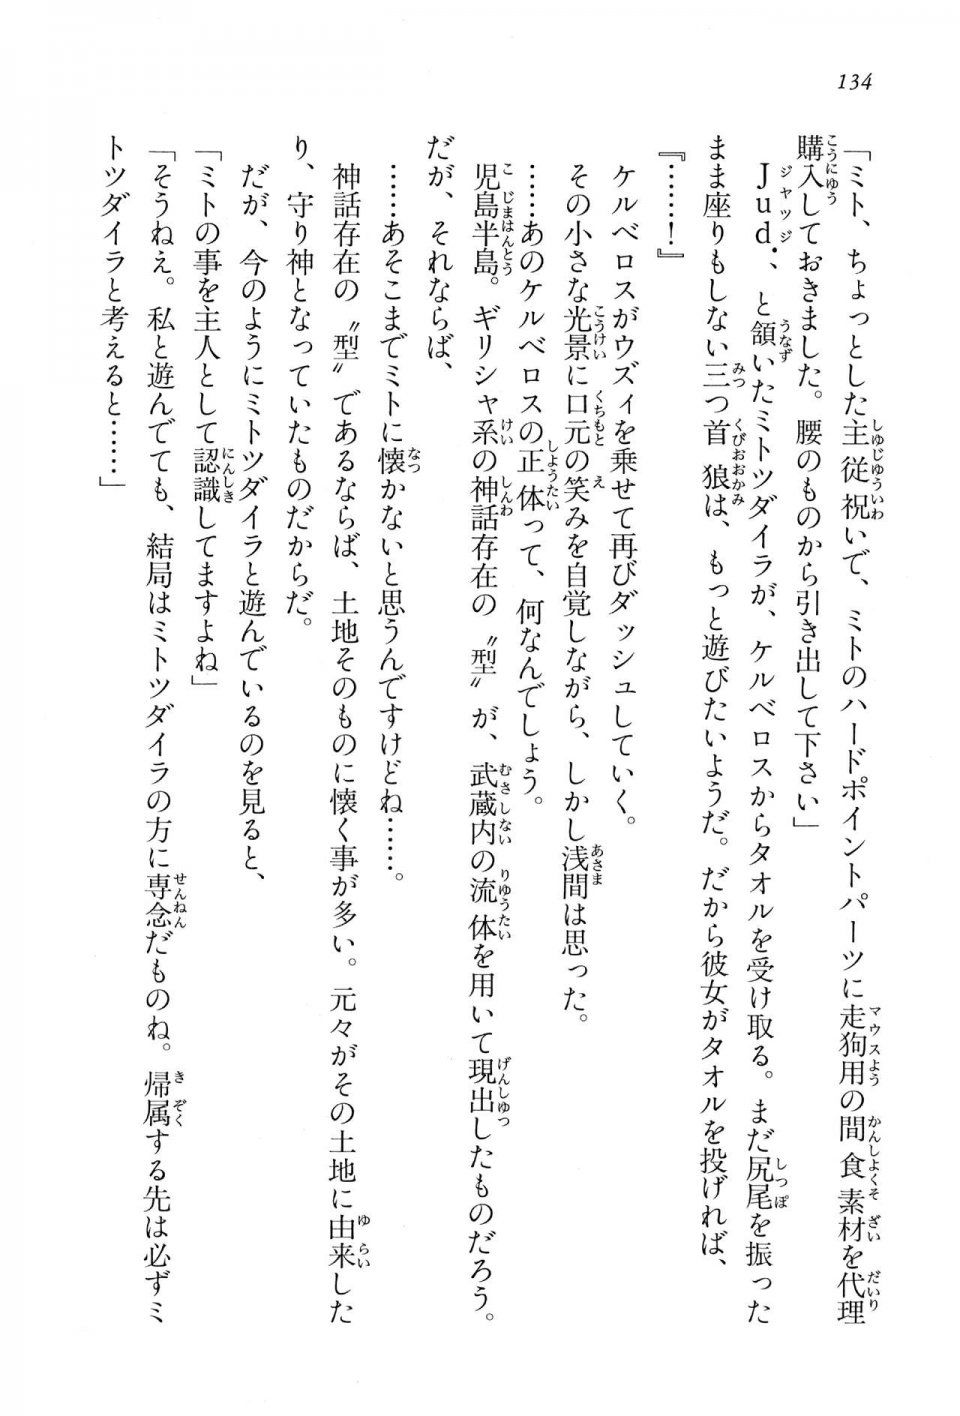 Kyoukai Senjou no Horizon BD Special Mininovel Vol 6(3B) - Photo #138